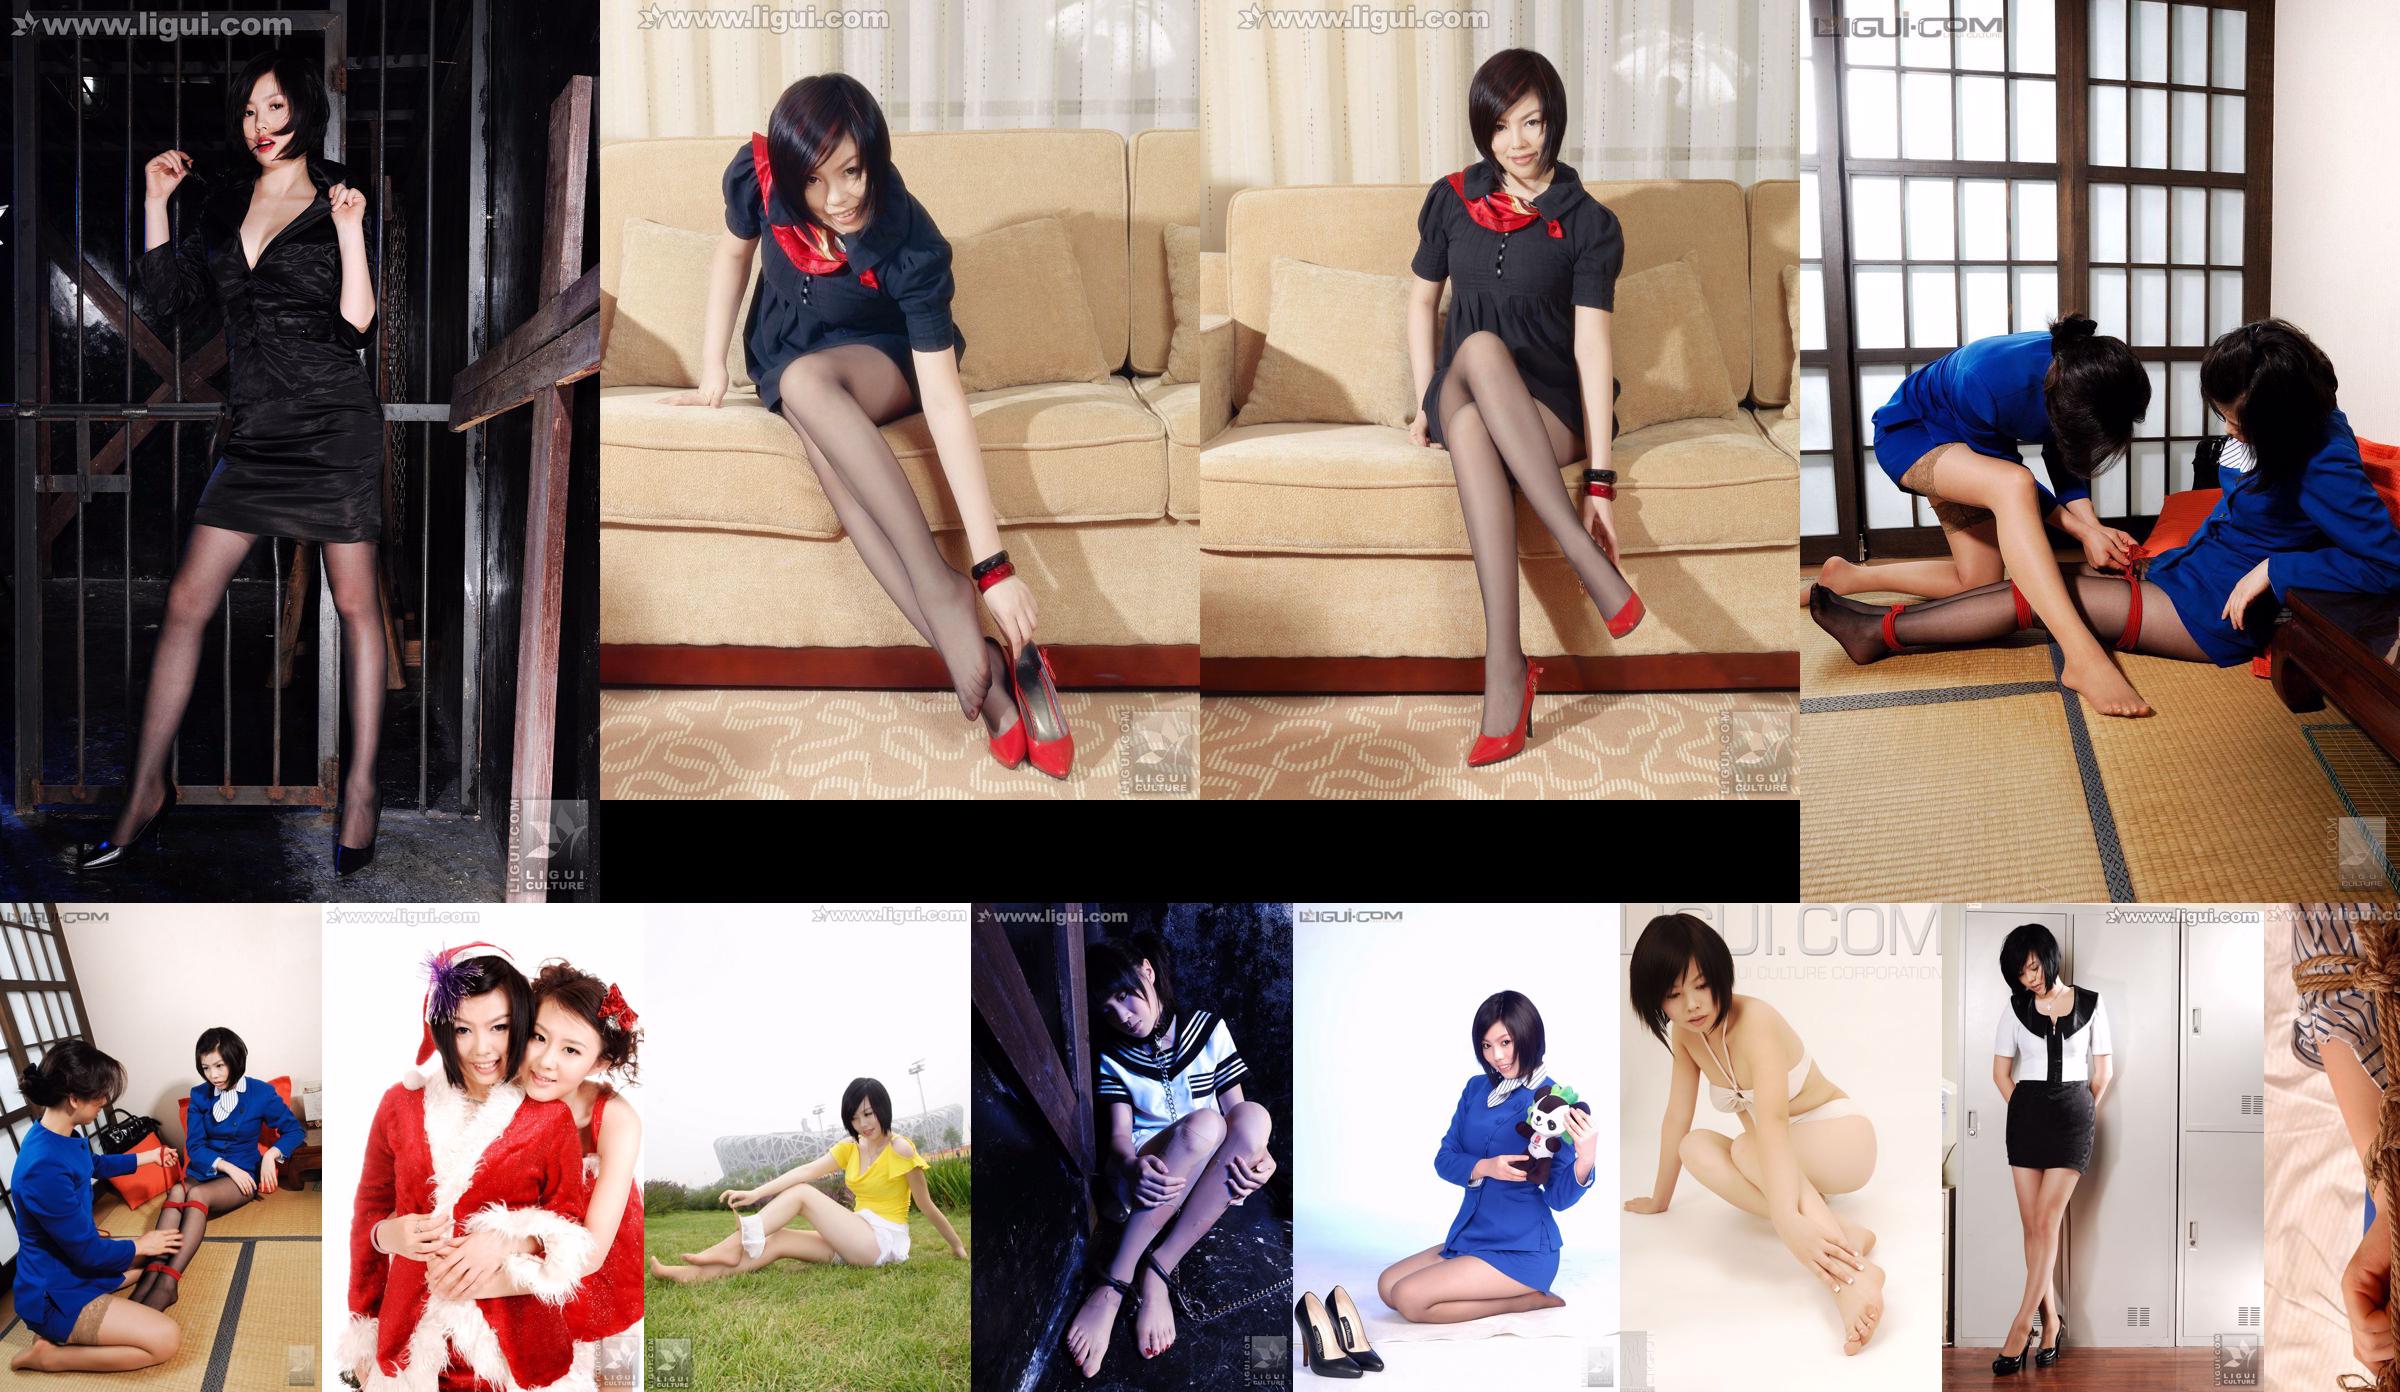 Model "Cute Pajama Foot Show" [Ligui LiGui] Stockings Foot Photo Picture No.38fa2d Page 1